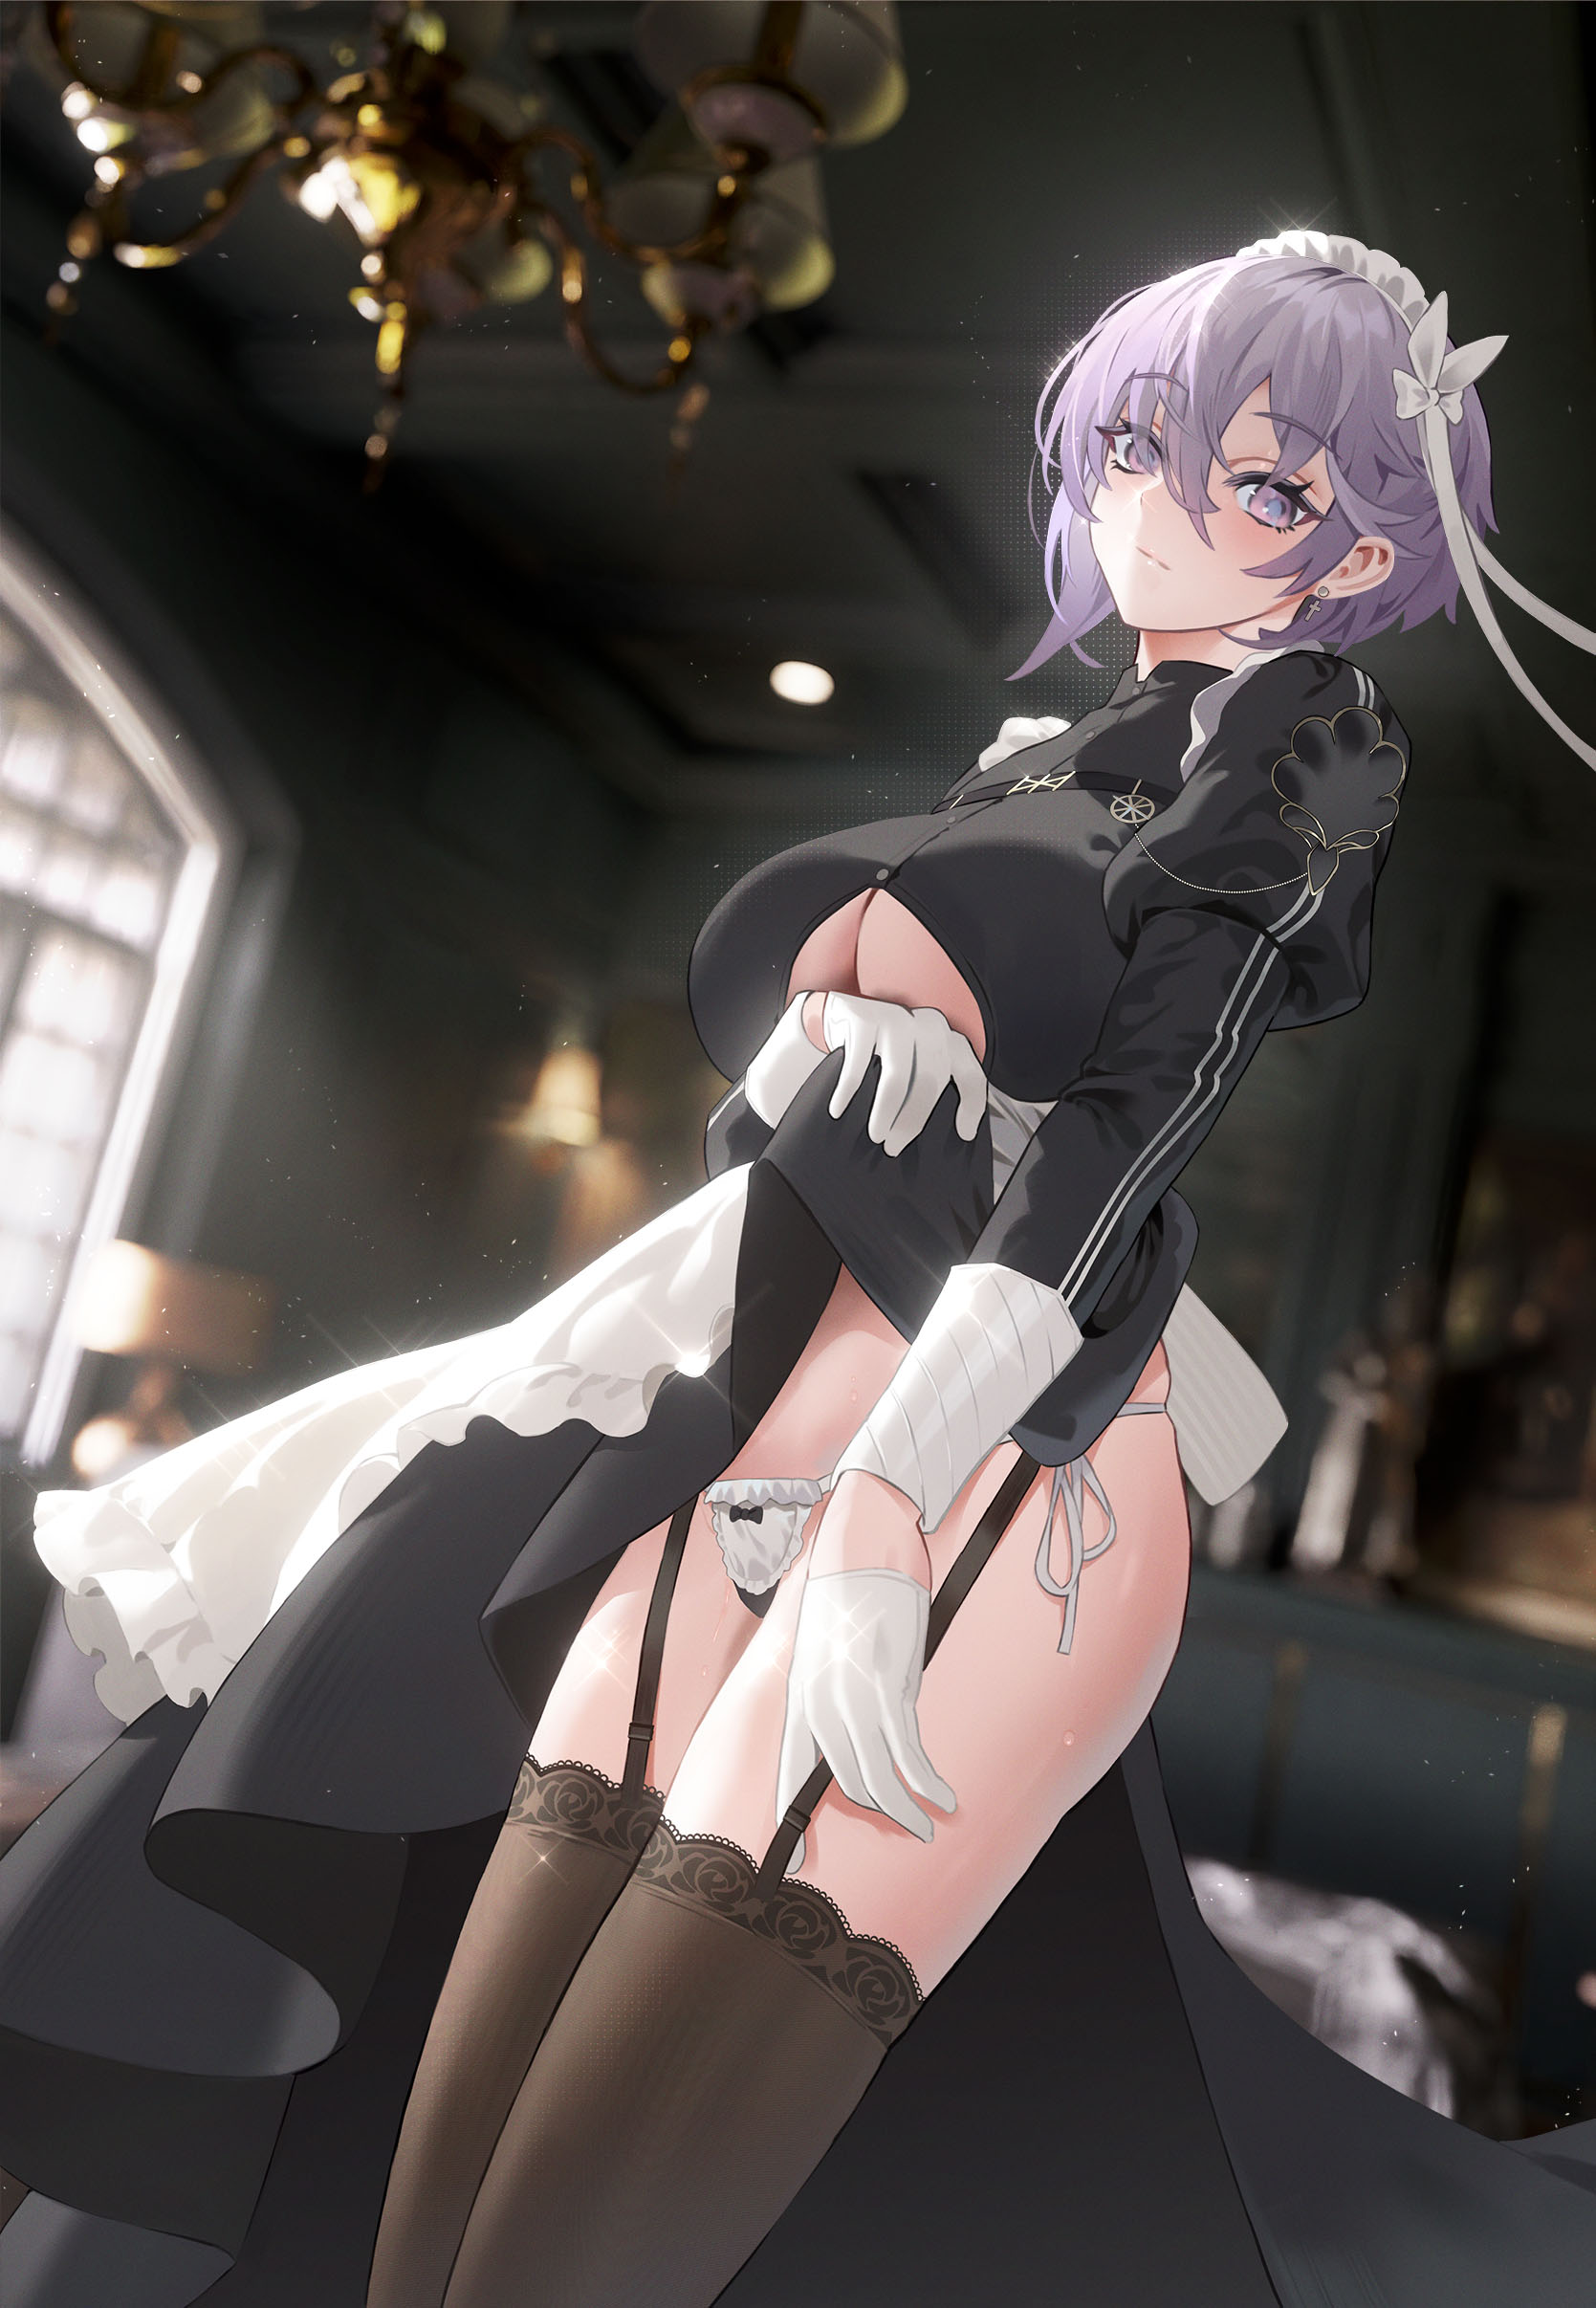 Anime 1669x2413 Azur Lane Bellona (Azur Lane) anime girls big boobs maid outfit lifting skirt stockings garter belt cleavage